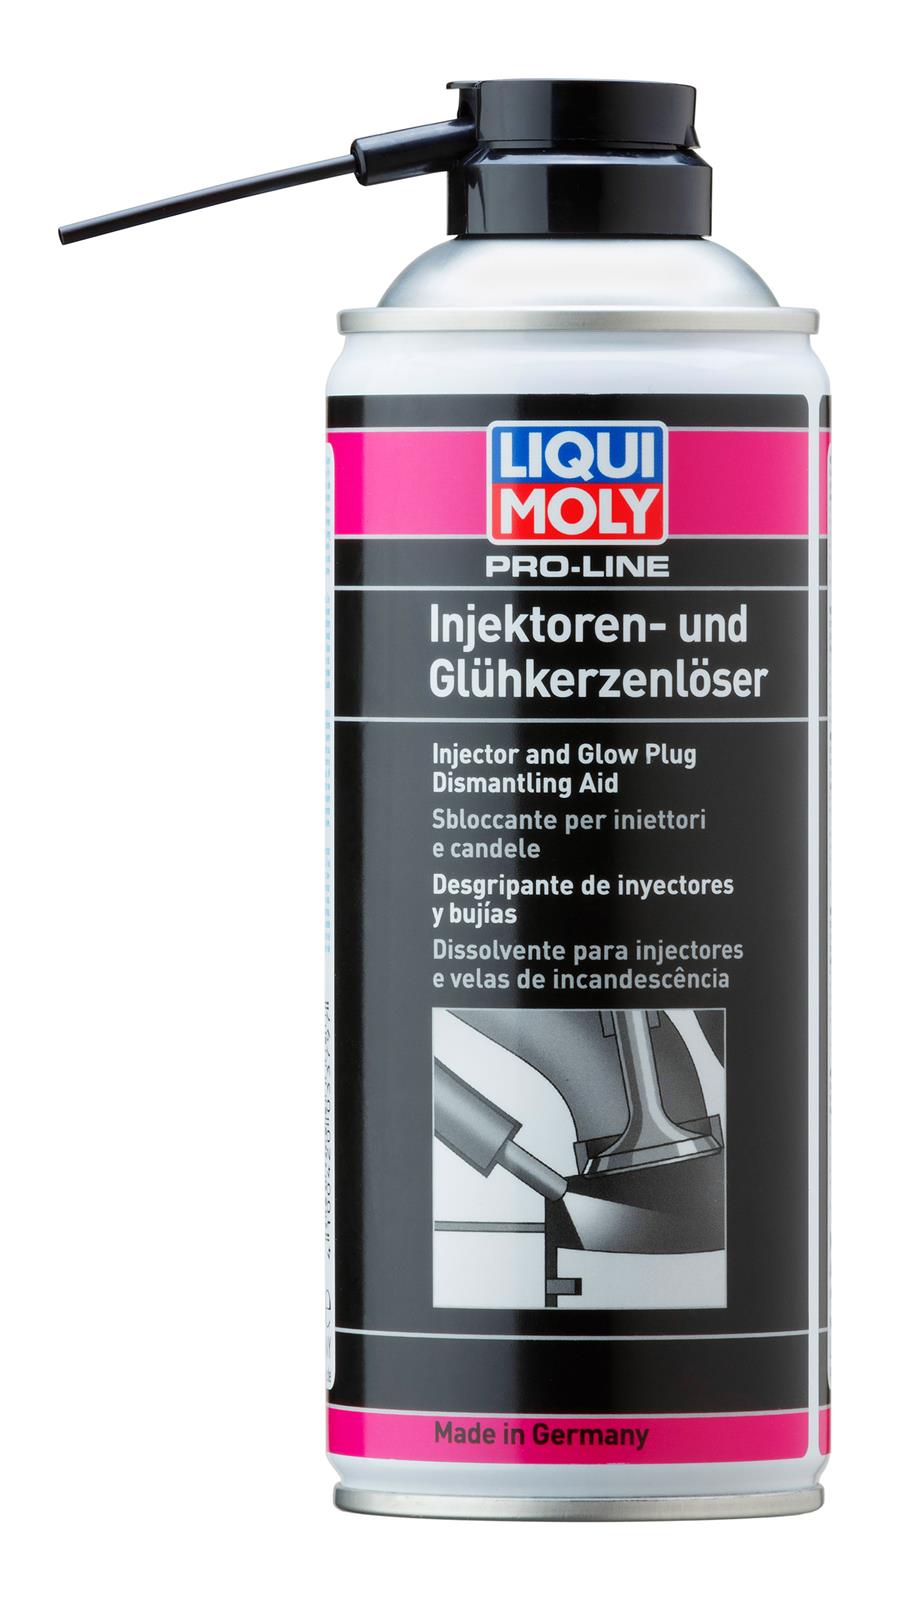 LIQUI MOLY Pro-Line Injektoren- und Glühkerzenlöser 400ml